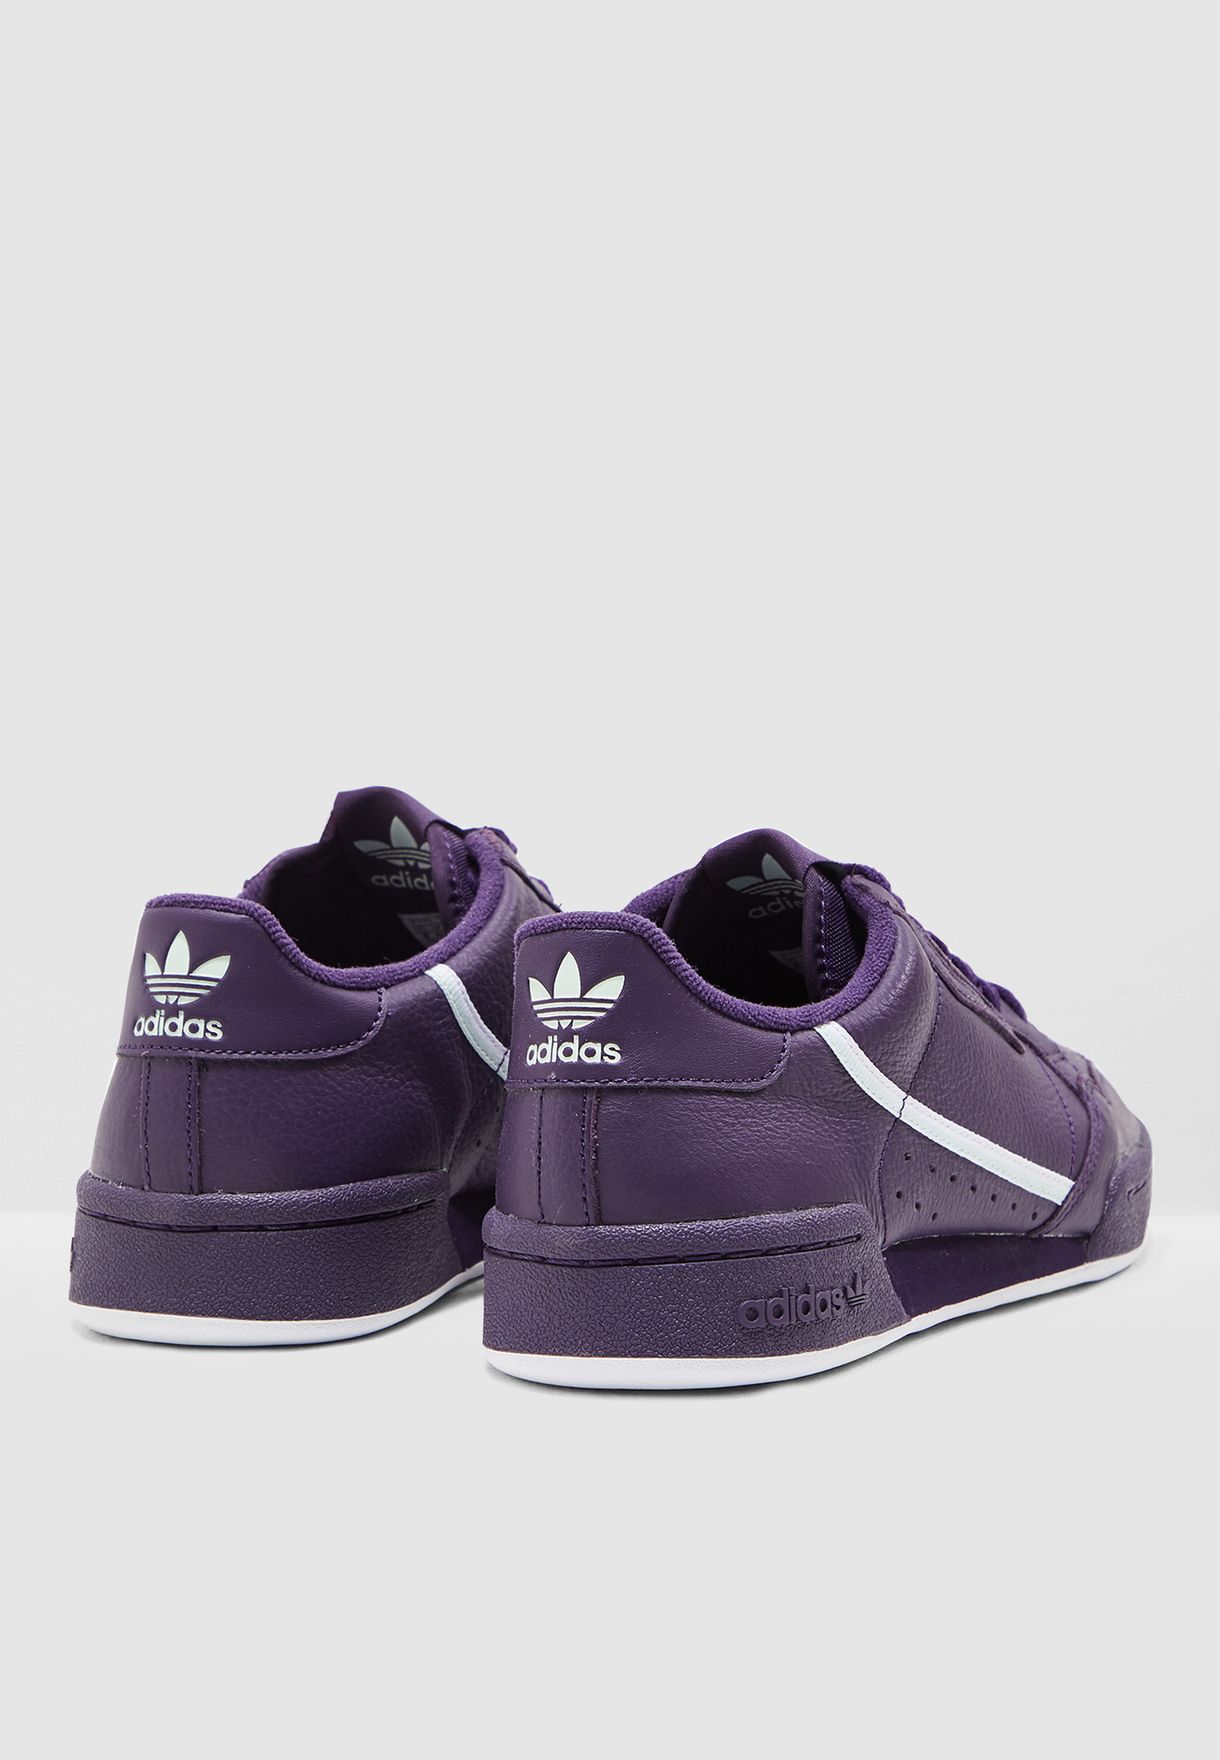 adidas continental purple